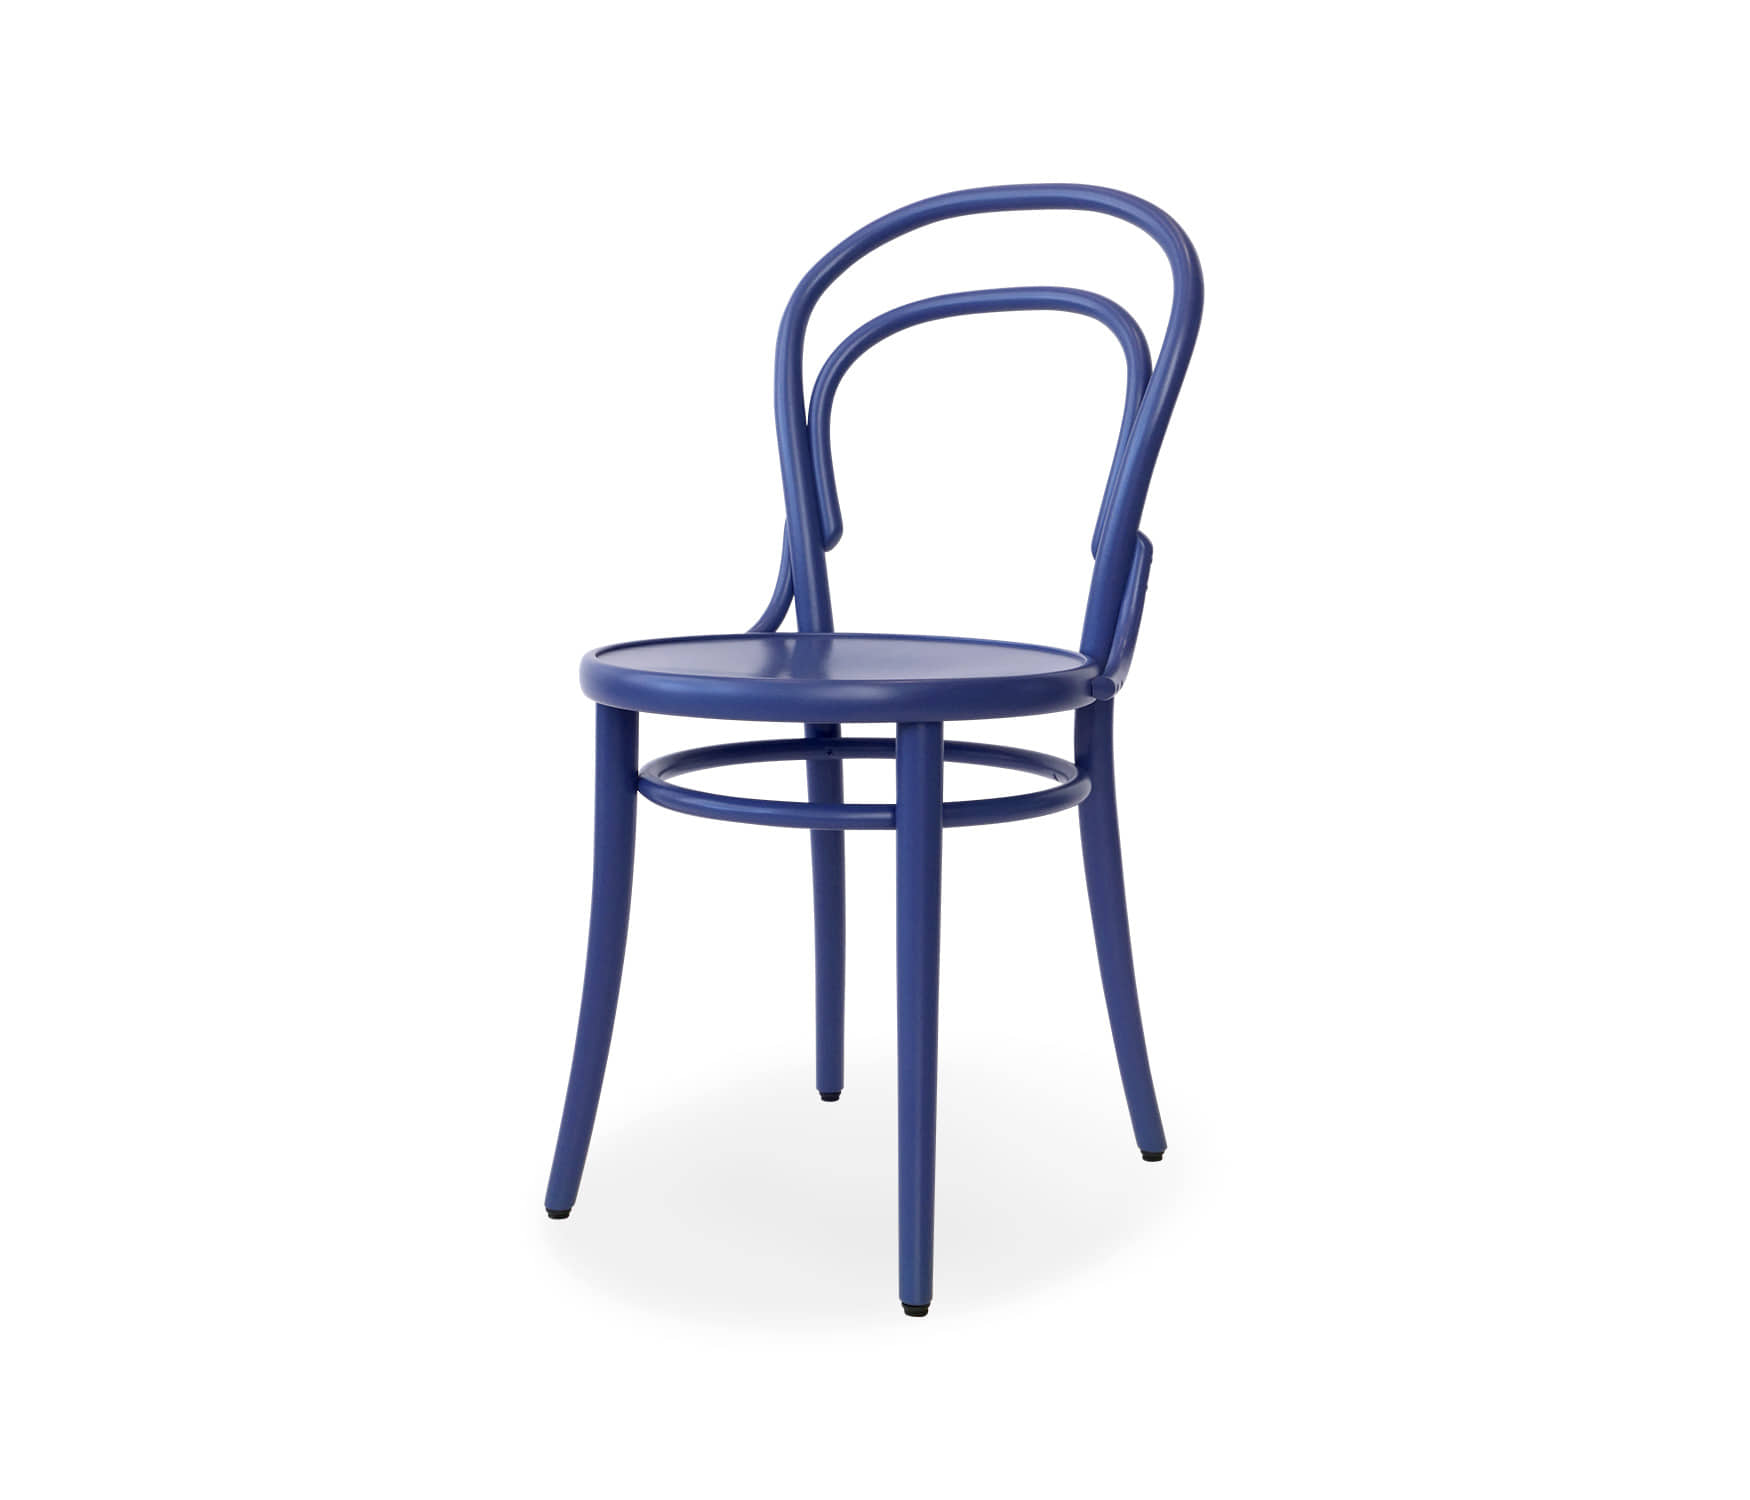 Chair 14 - Blue Berries